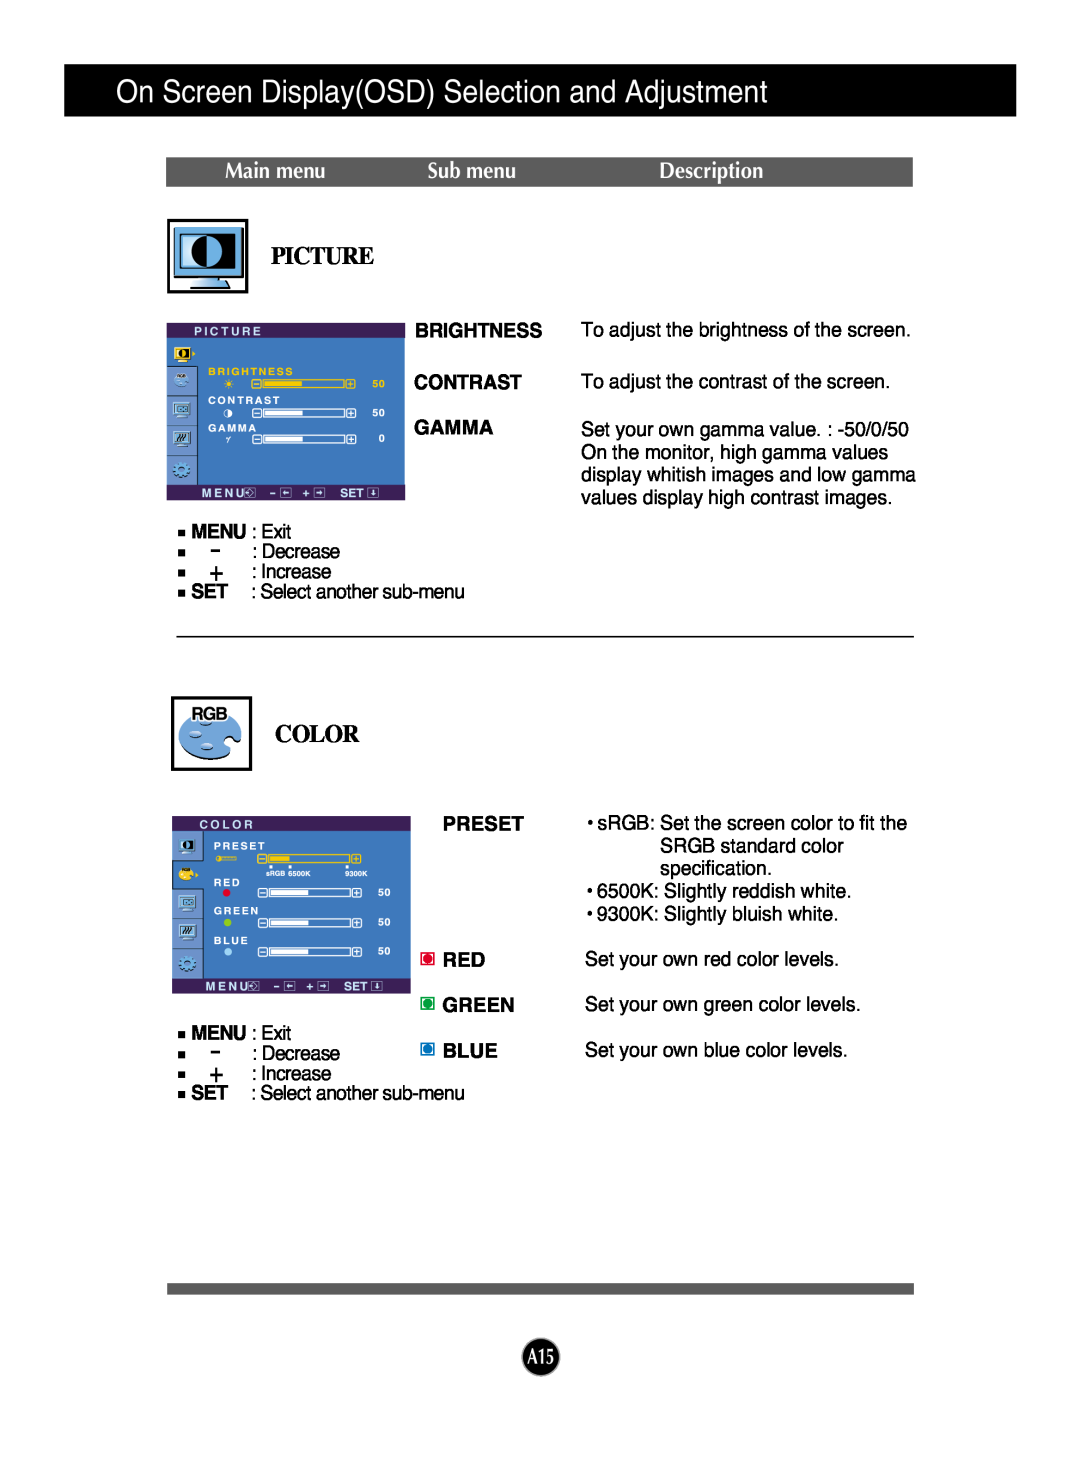 LG Electronics L226WTX Picture, Color, Main menu, Sub menu, Description, On Screen DisplayOSD Selection and Adjustment 